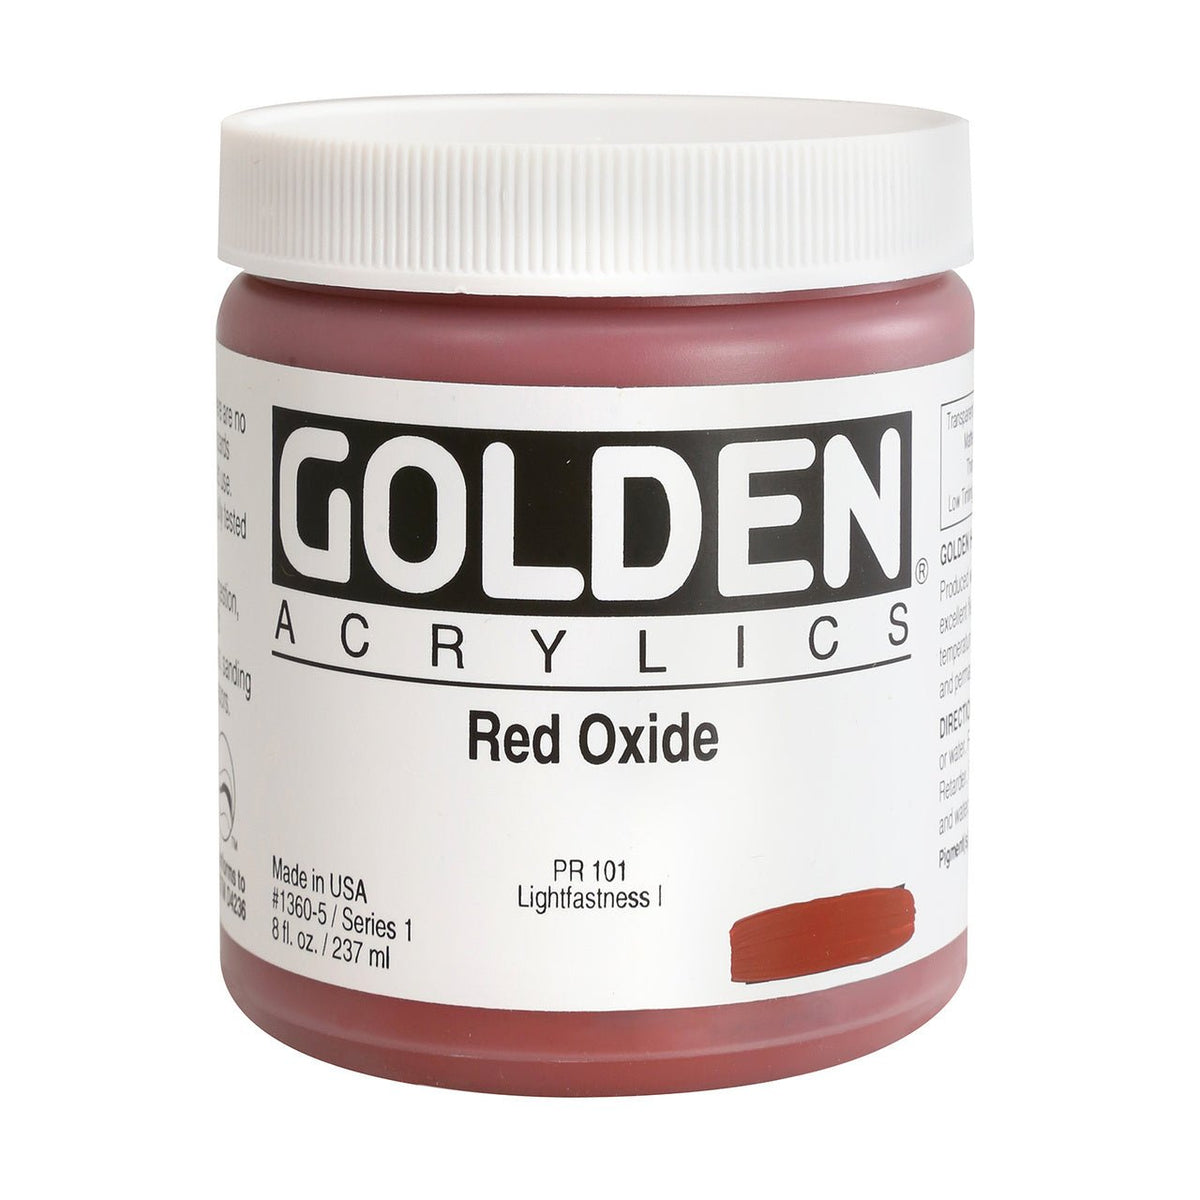 Golden Heavy Body Acrylic Red Oxide 8 oz - merriartist.com